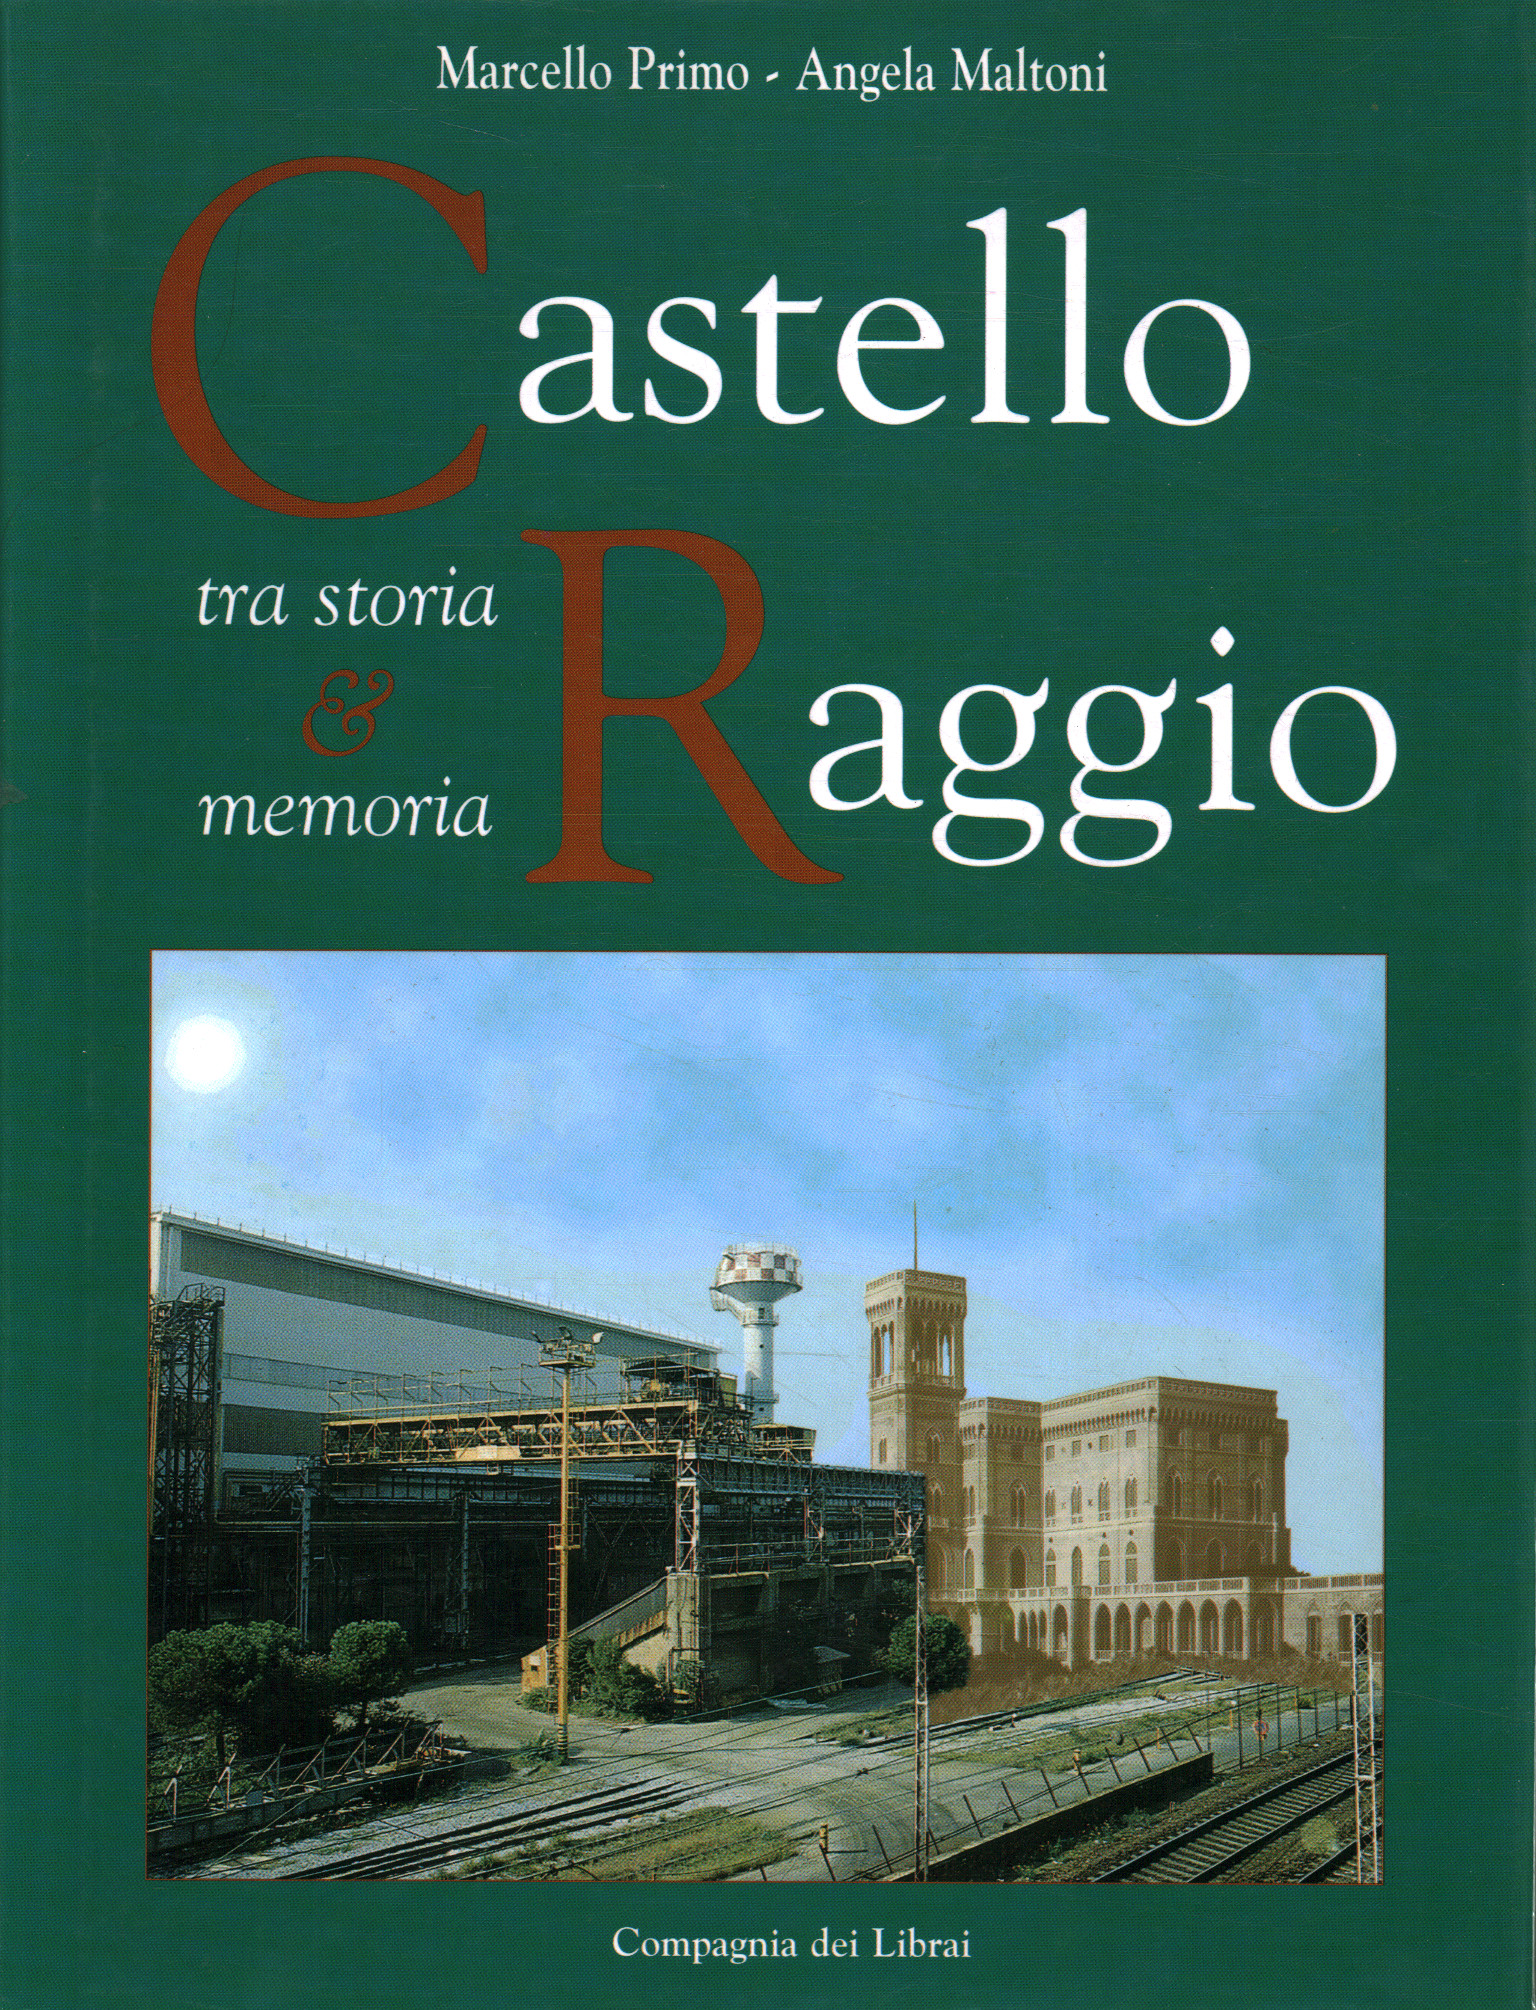 Castello Raggio entre historia y memoria